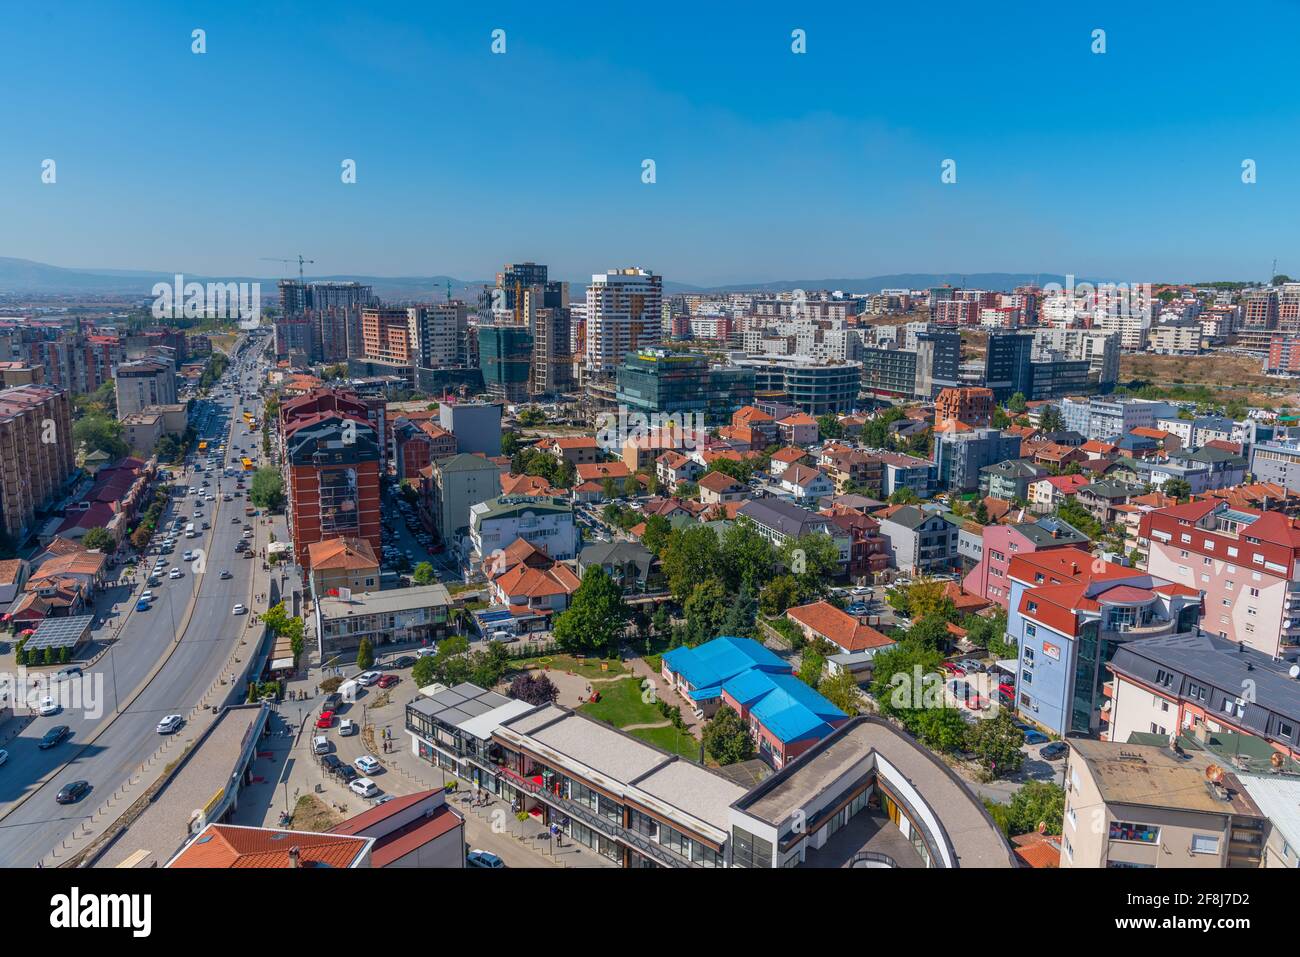 PRISHTINA, KOSOVO, 16. SEPTEMBER 2019: Luftaufnahme des Bill Clinton Boulevards in Prishtina, Kosovo Stockfoto